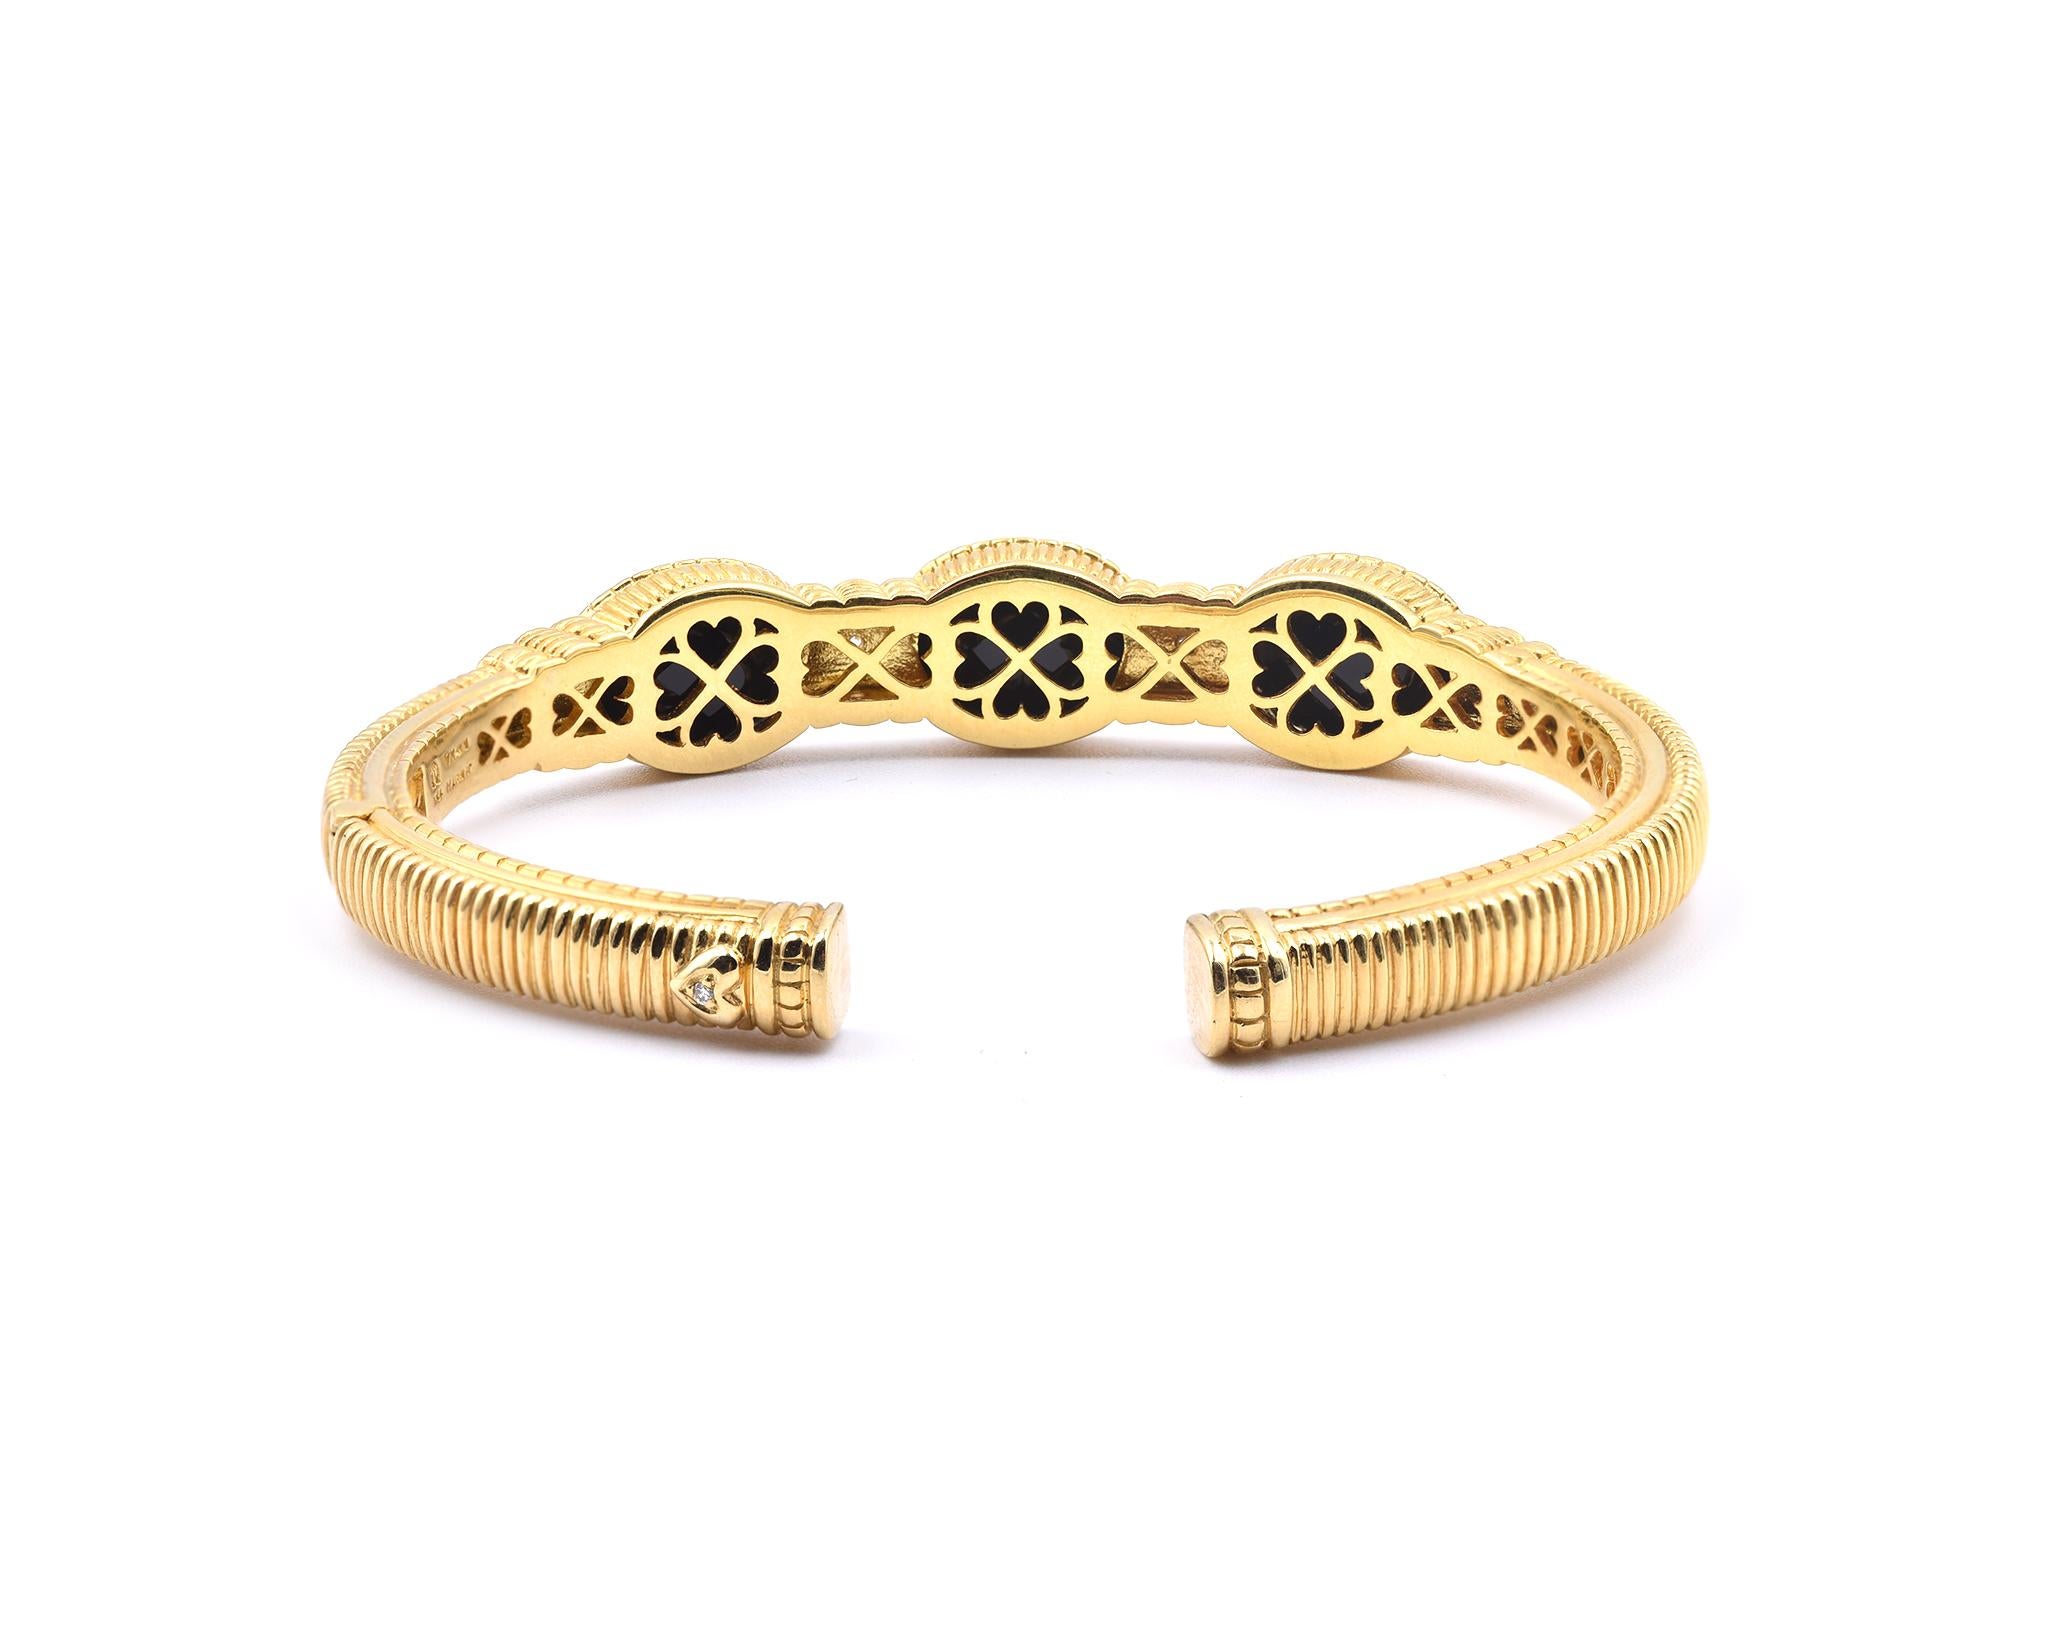 Round Cut Judith Ripka 18 Karat Yellow Gold Black Onyx and Diamond Cuff Bracelet